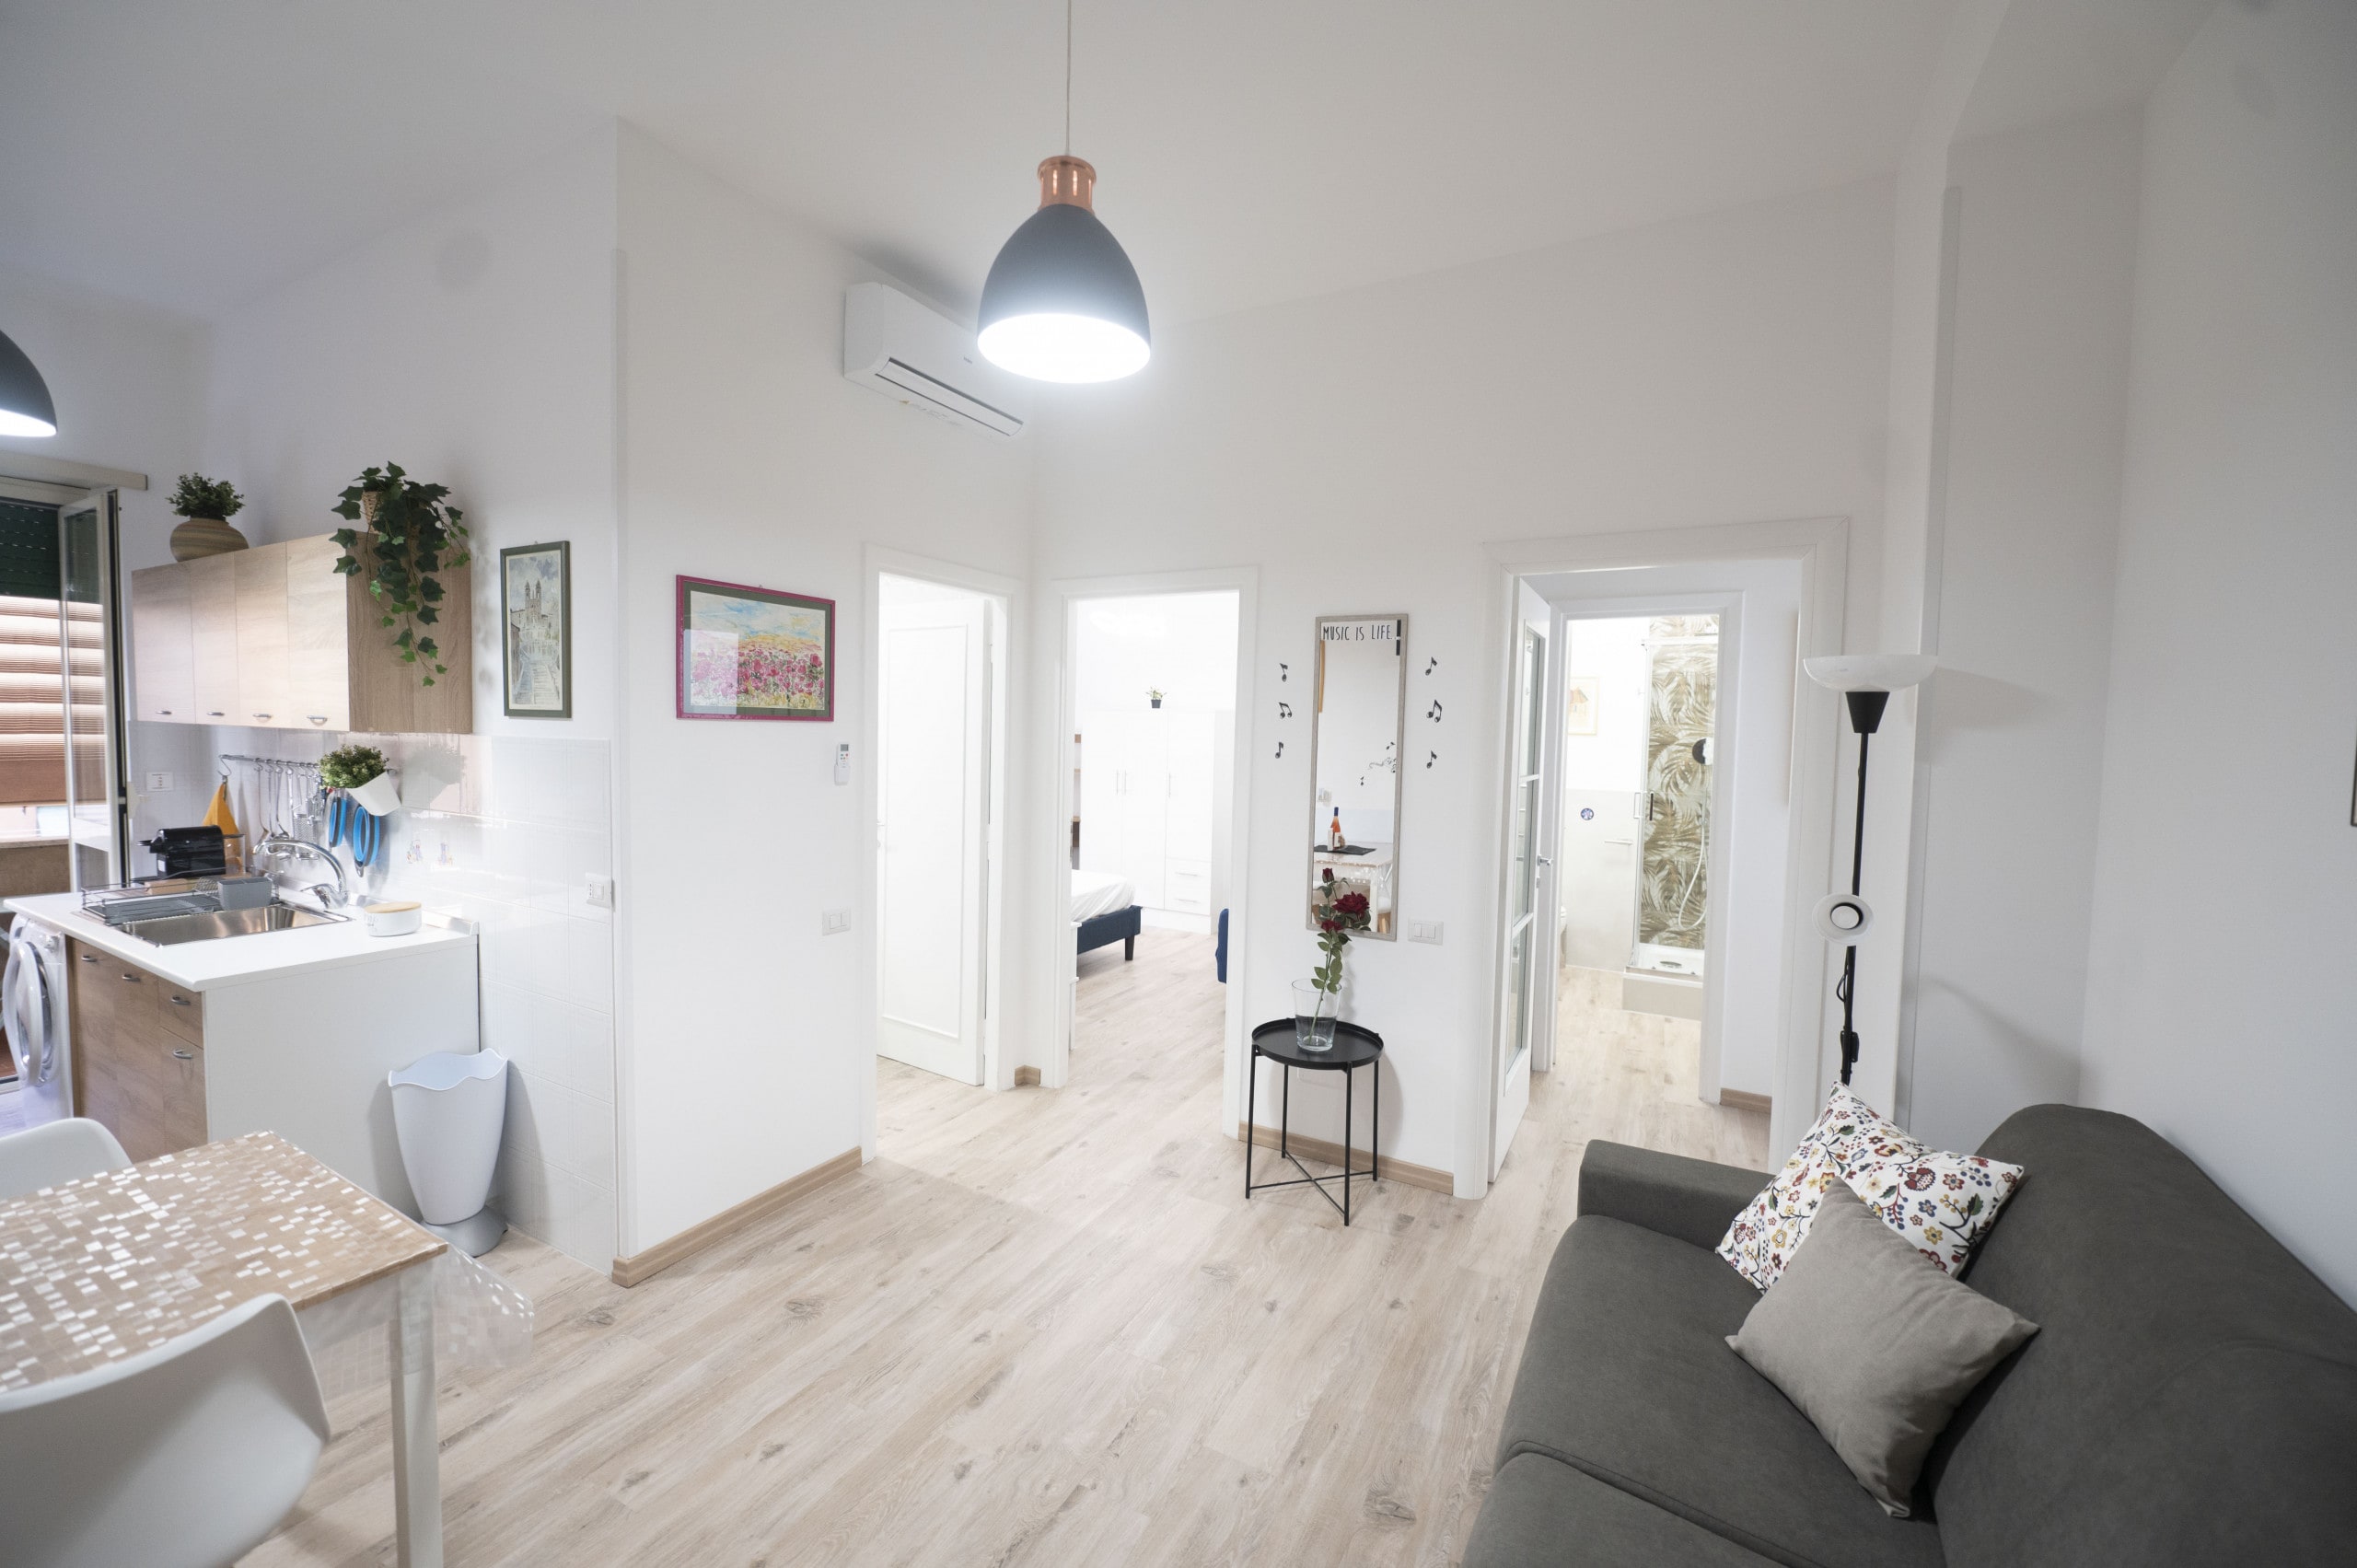 Property Image 1 - Brand New 2 BR Apartment in Vibrant Pigneto Rione